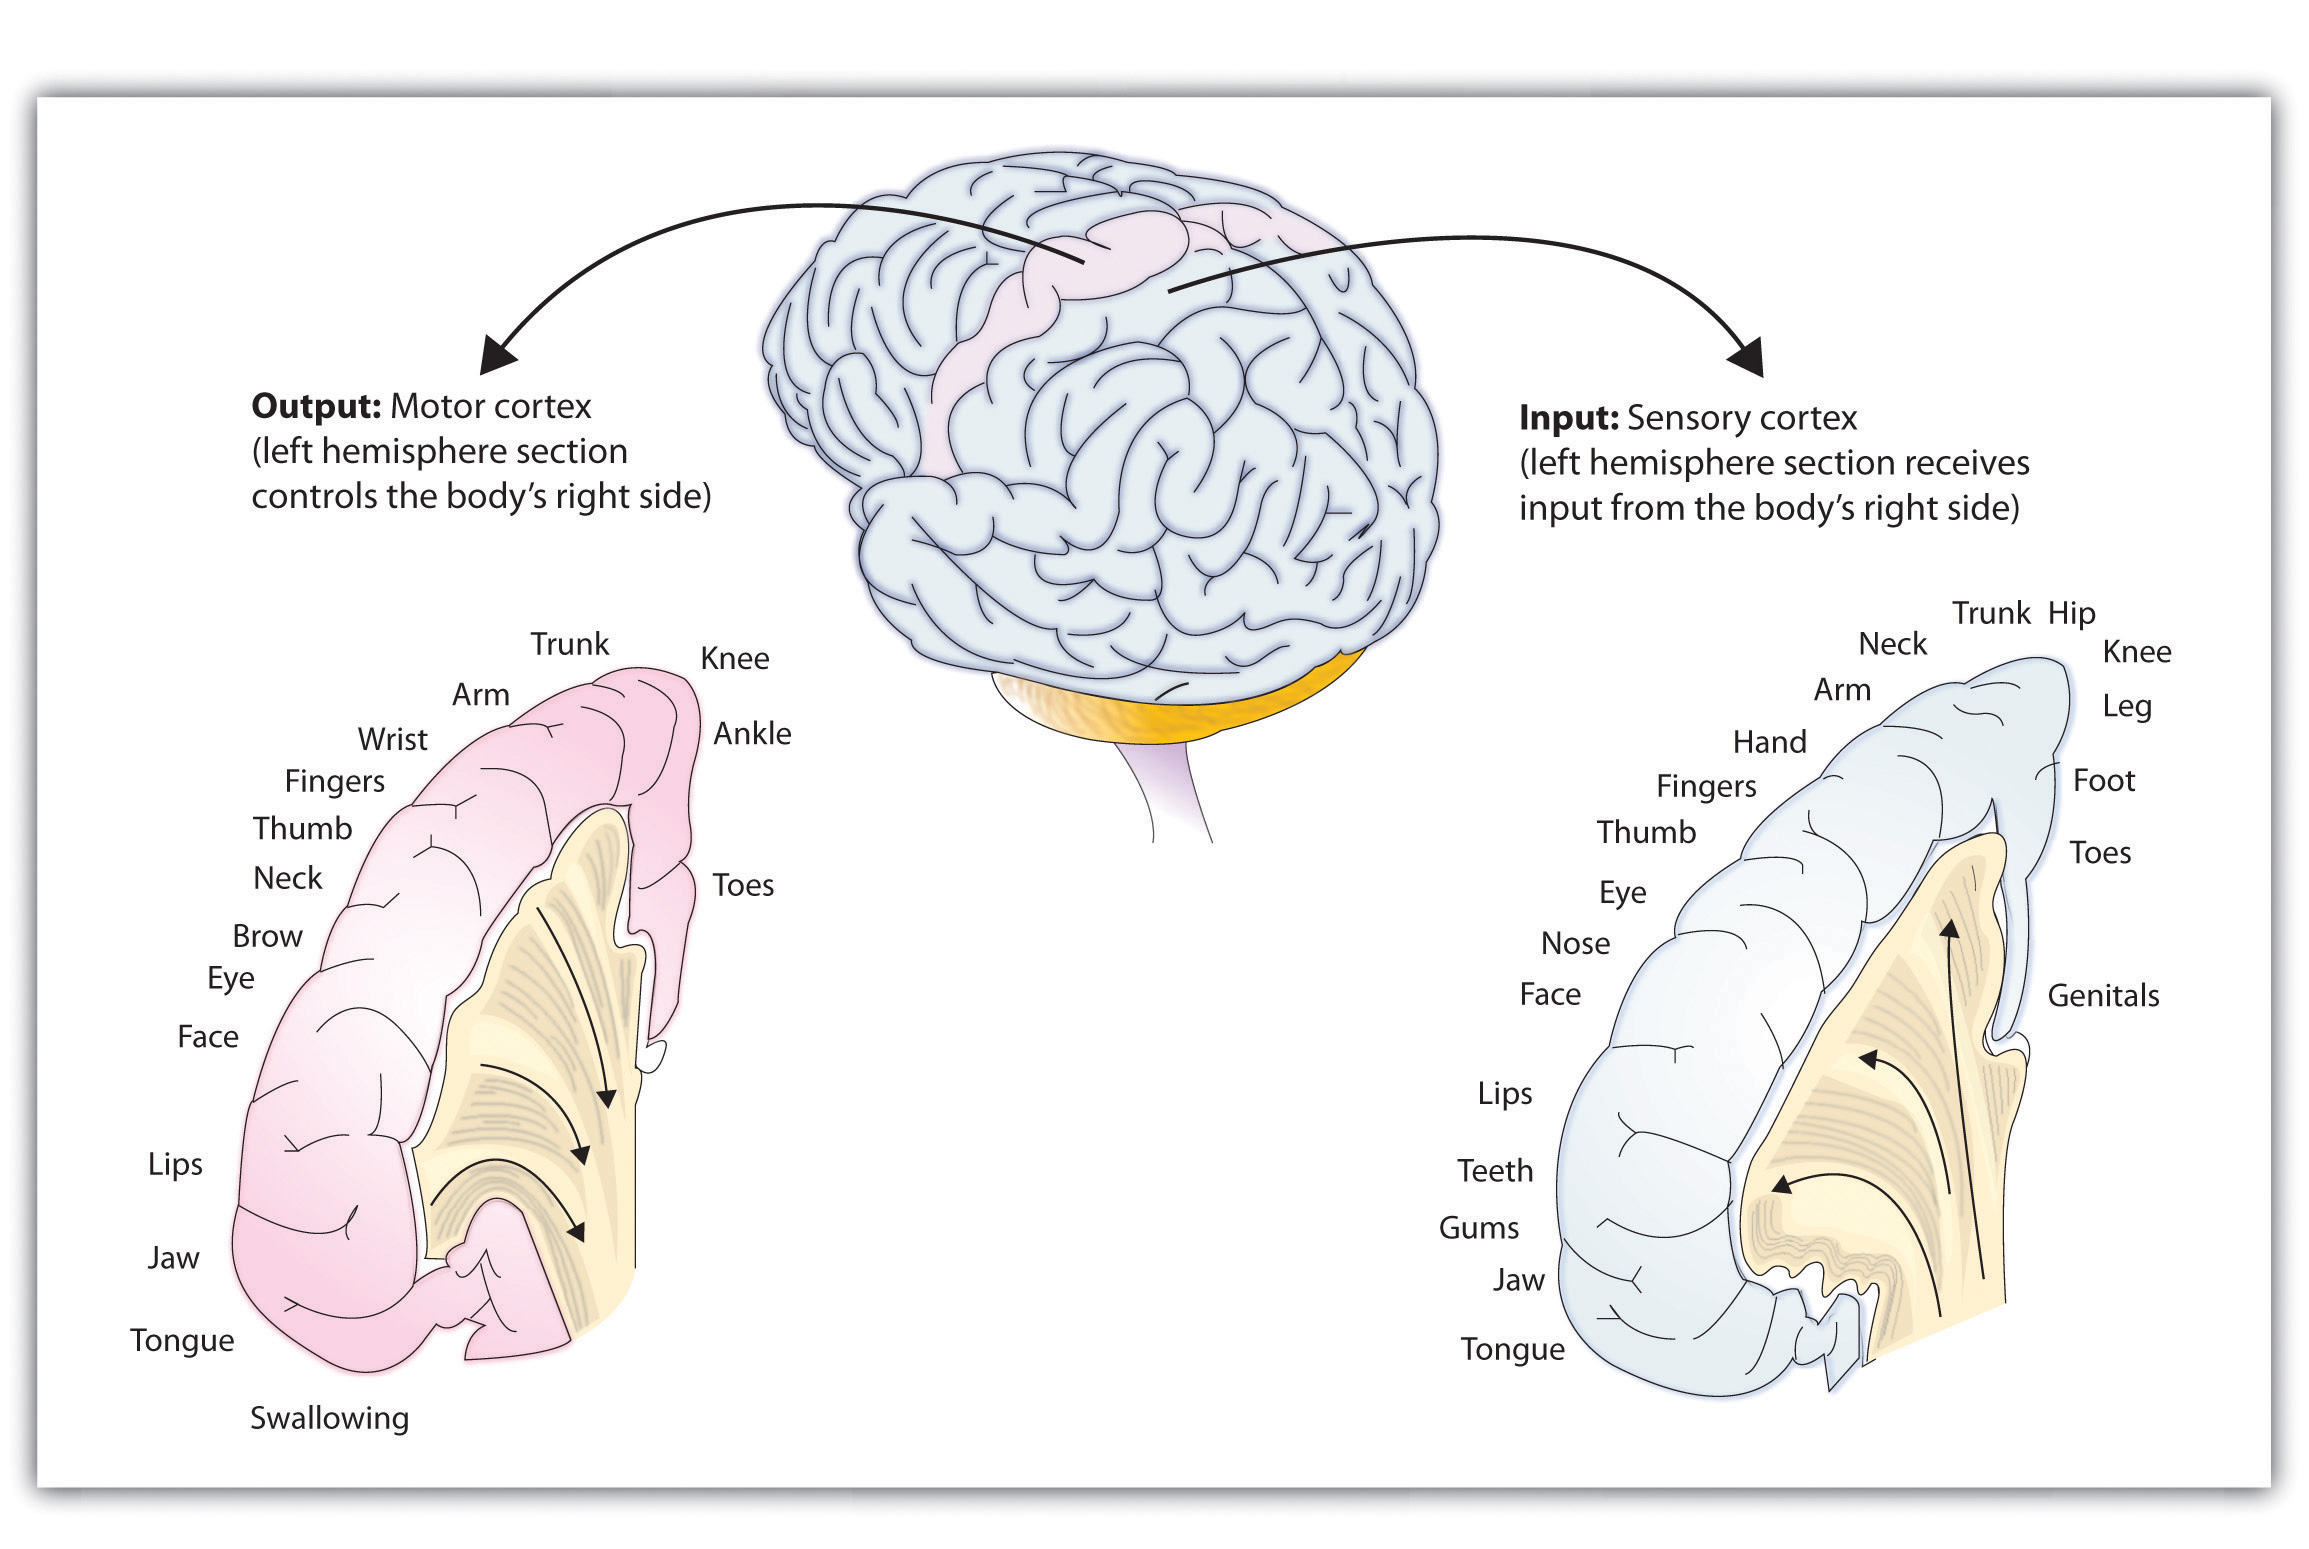 The sensory cortex and the motor cortex